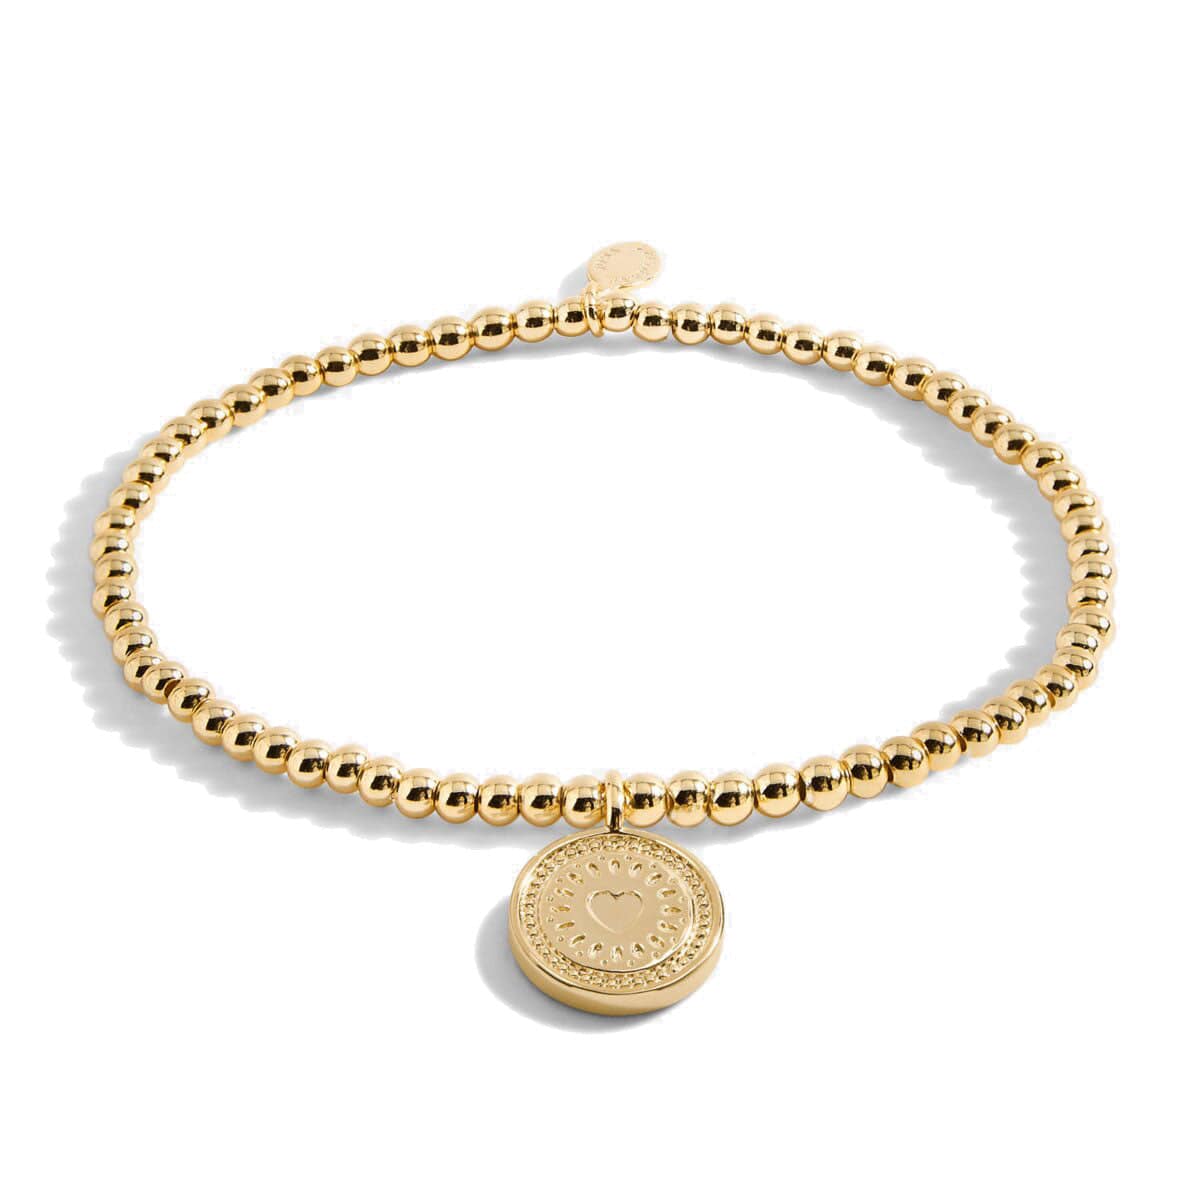 Joma Jewellery Bracelet Joma Jewellery Gold Plated Bracelet - A Little 630th Birthday